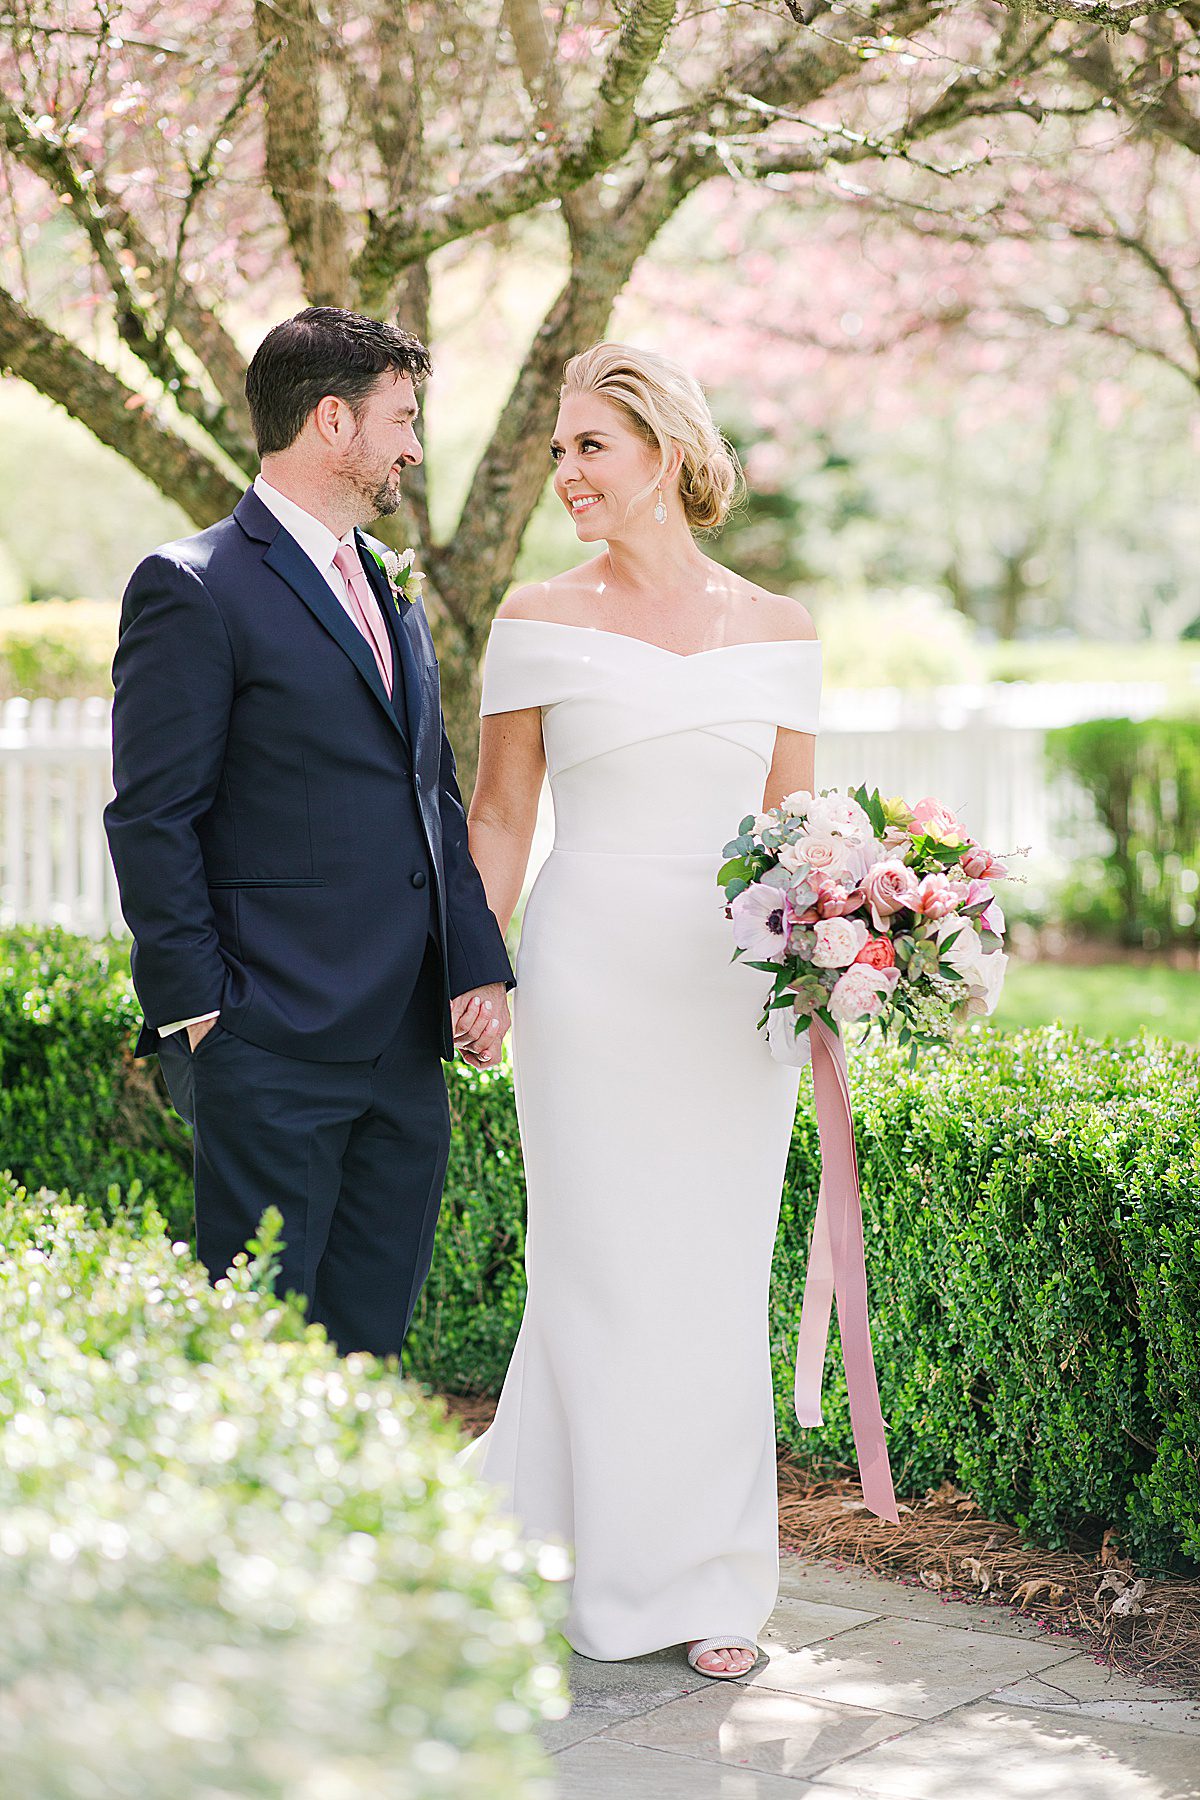 Bride in Romona Keveža Wedding Gown Walking with Groom in Garden Photo